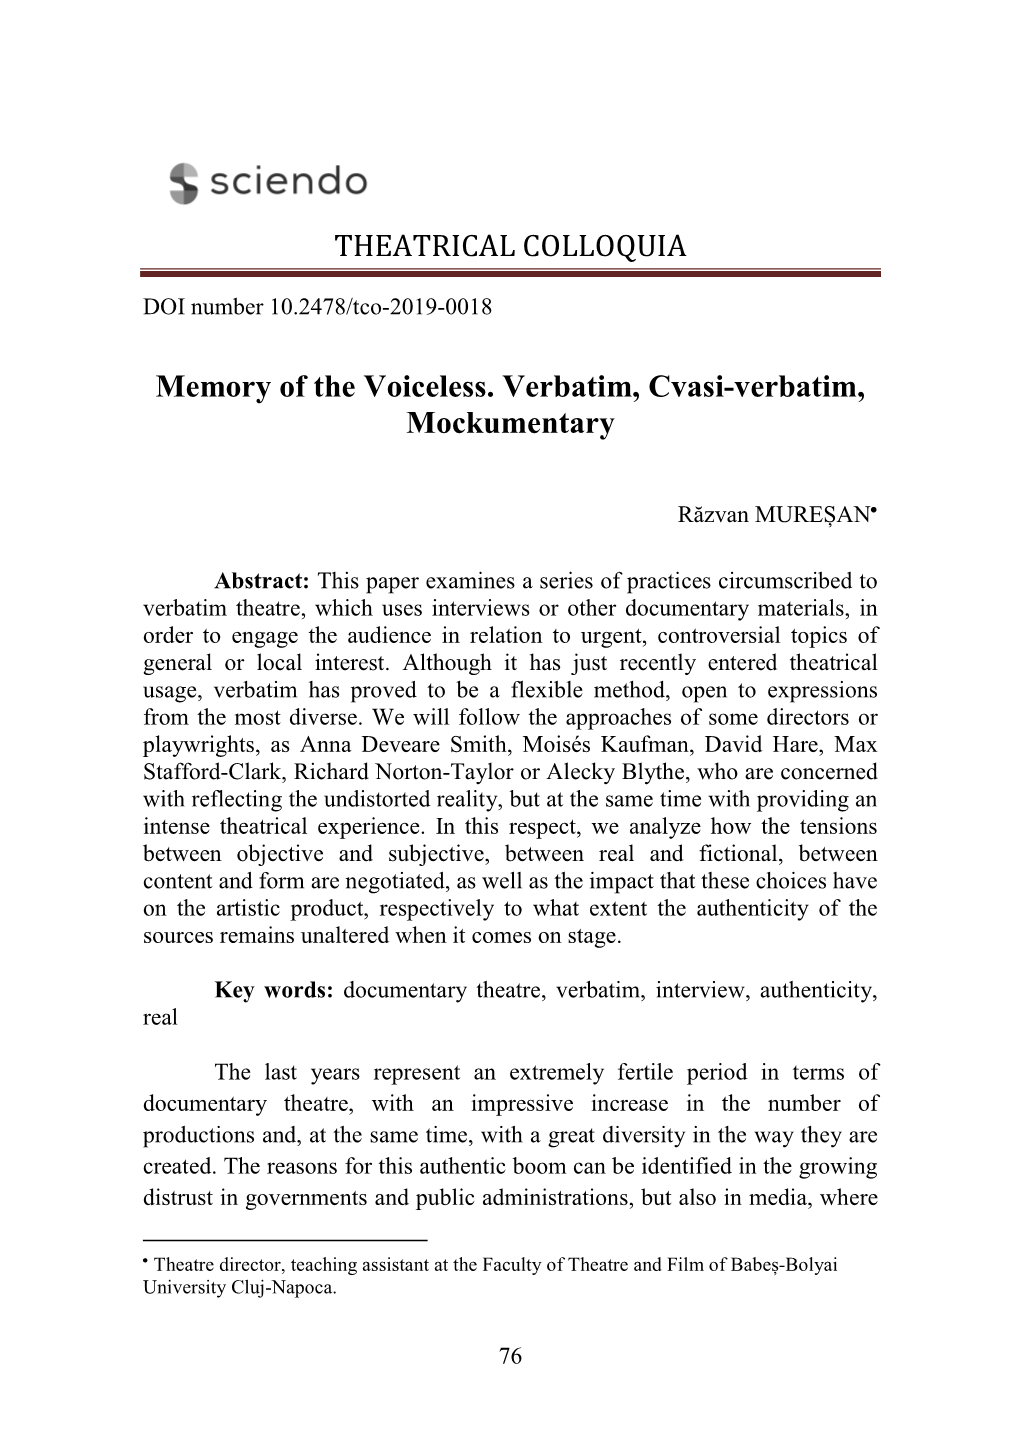 Memory of the Voiceless. Verbatim, Cvasi-Verbatim, Mockumentary